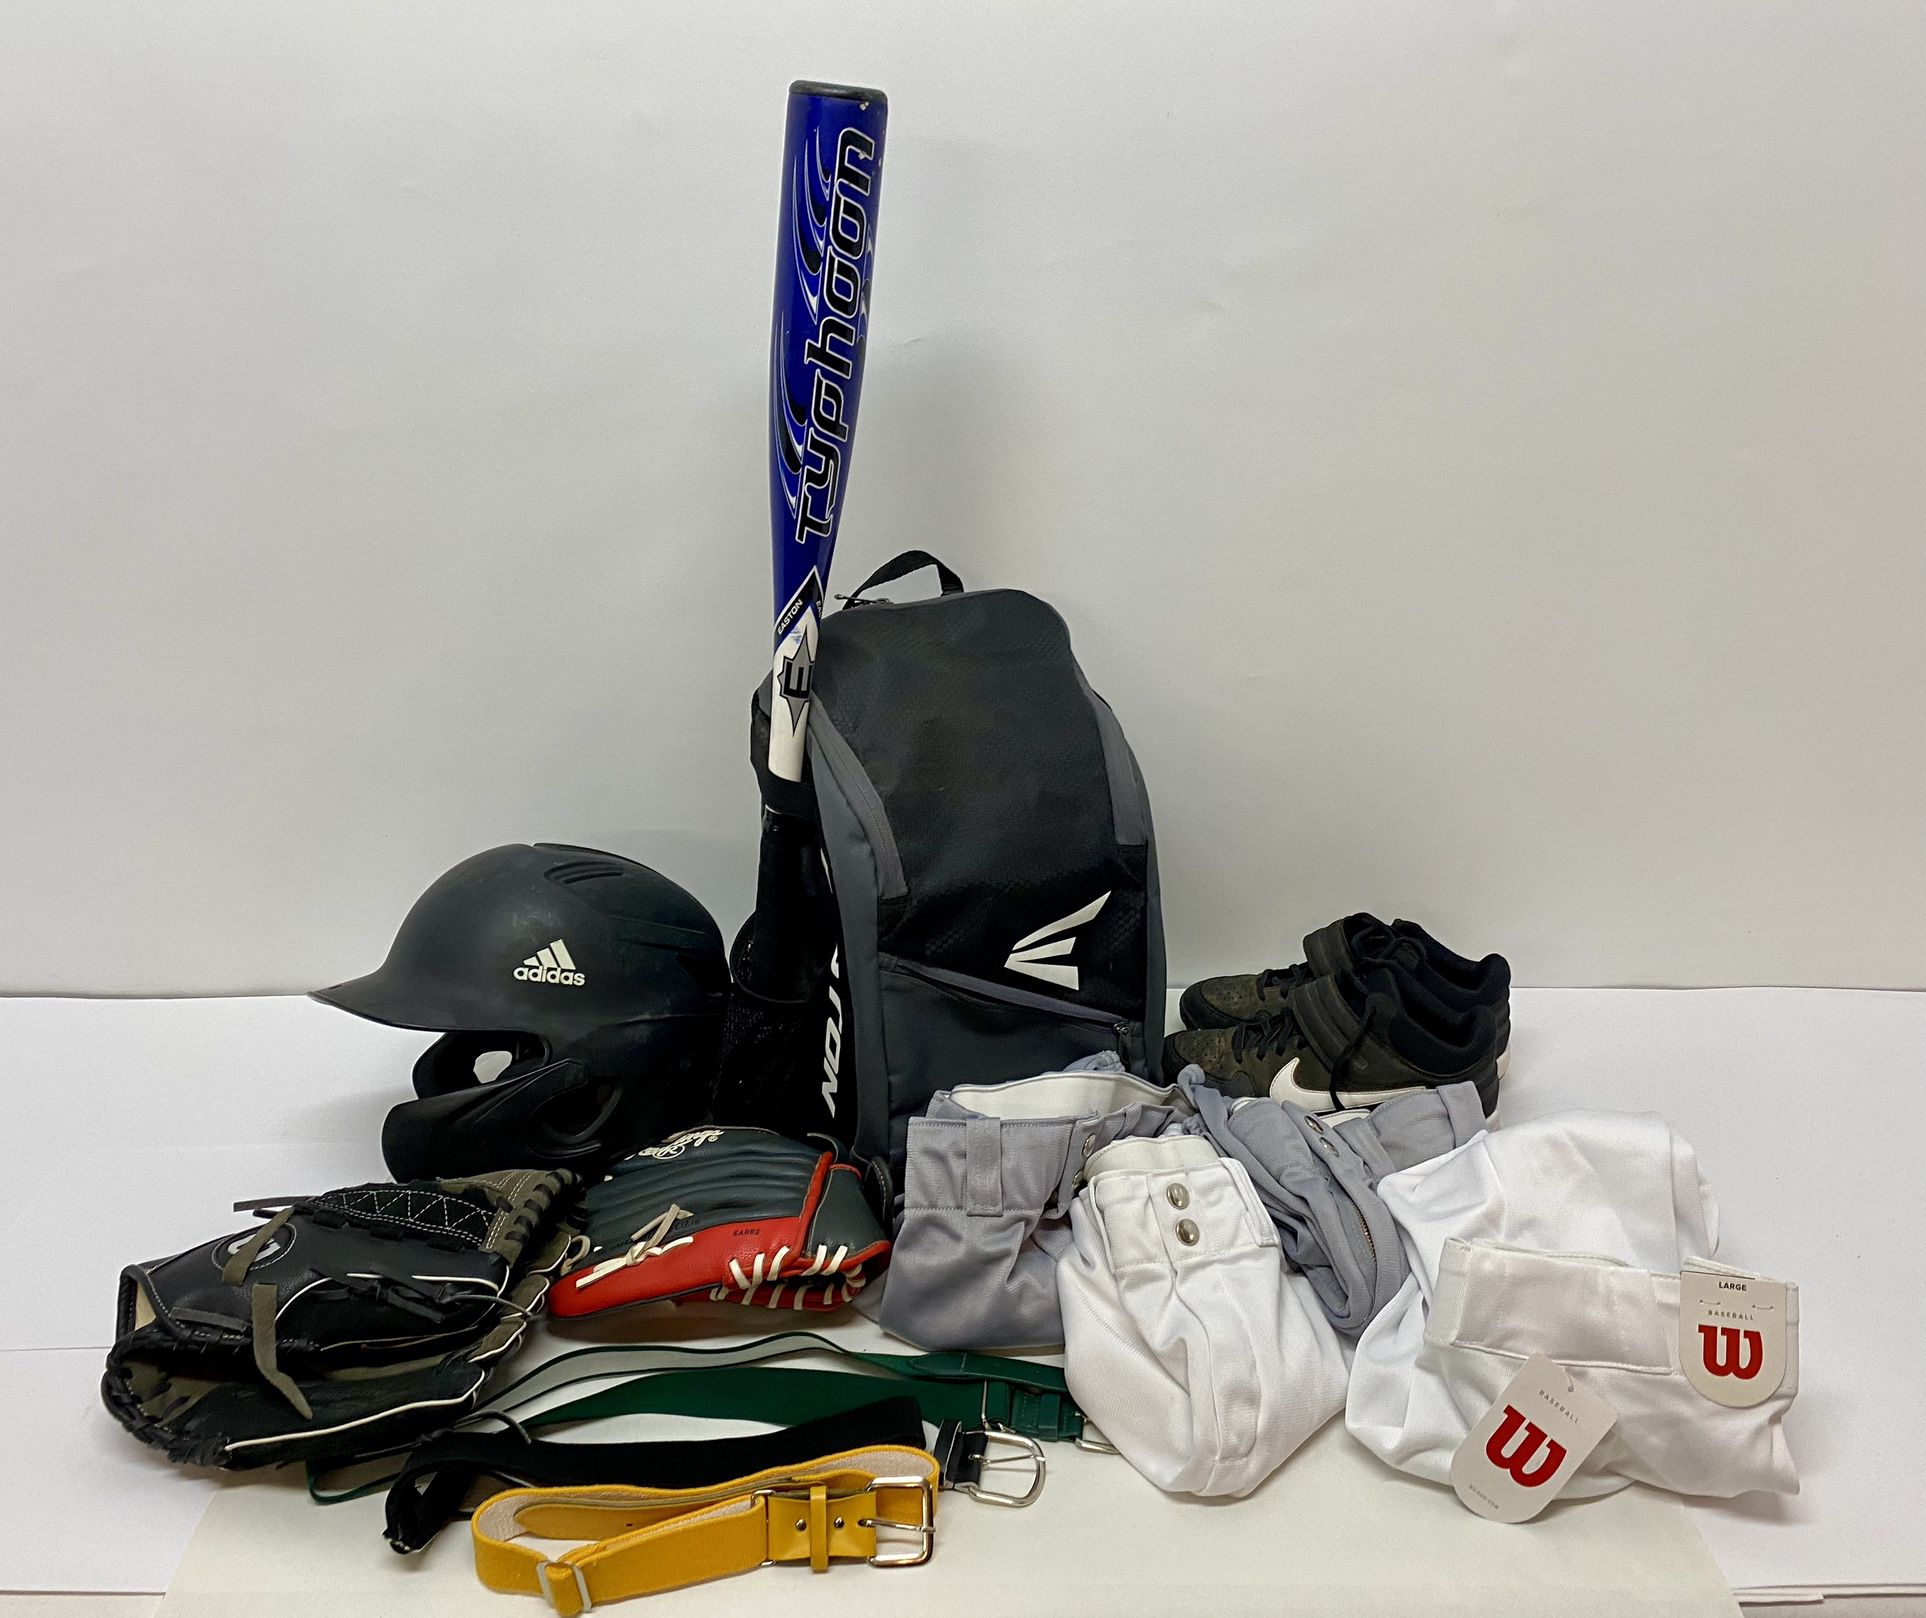 Baseball T-ball Bat Glove Gloves Cleats Pants Helmet with Jaw Guard 